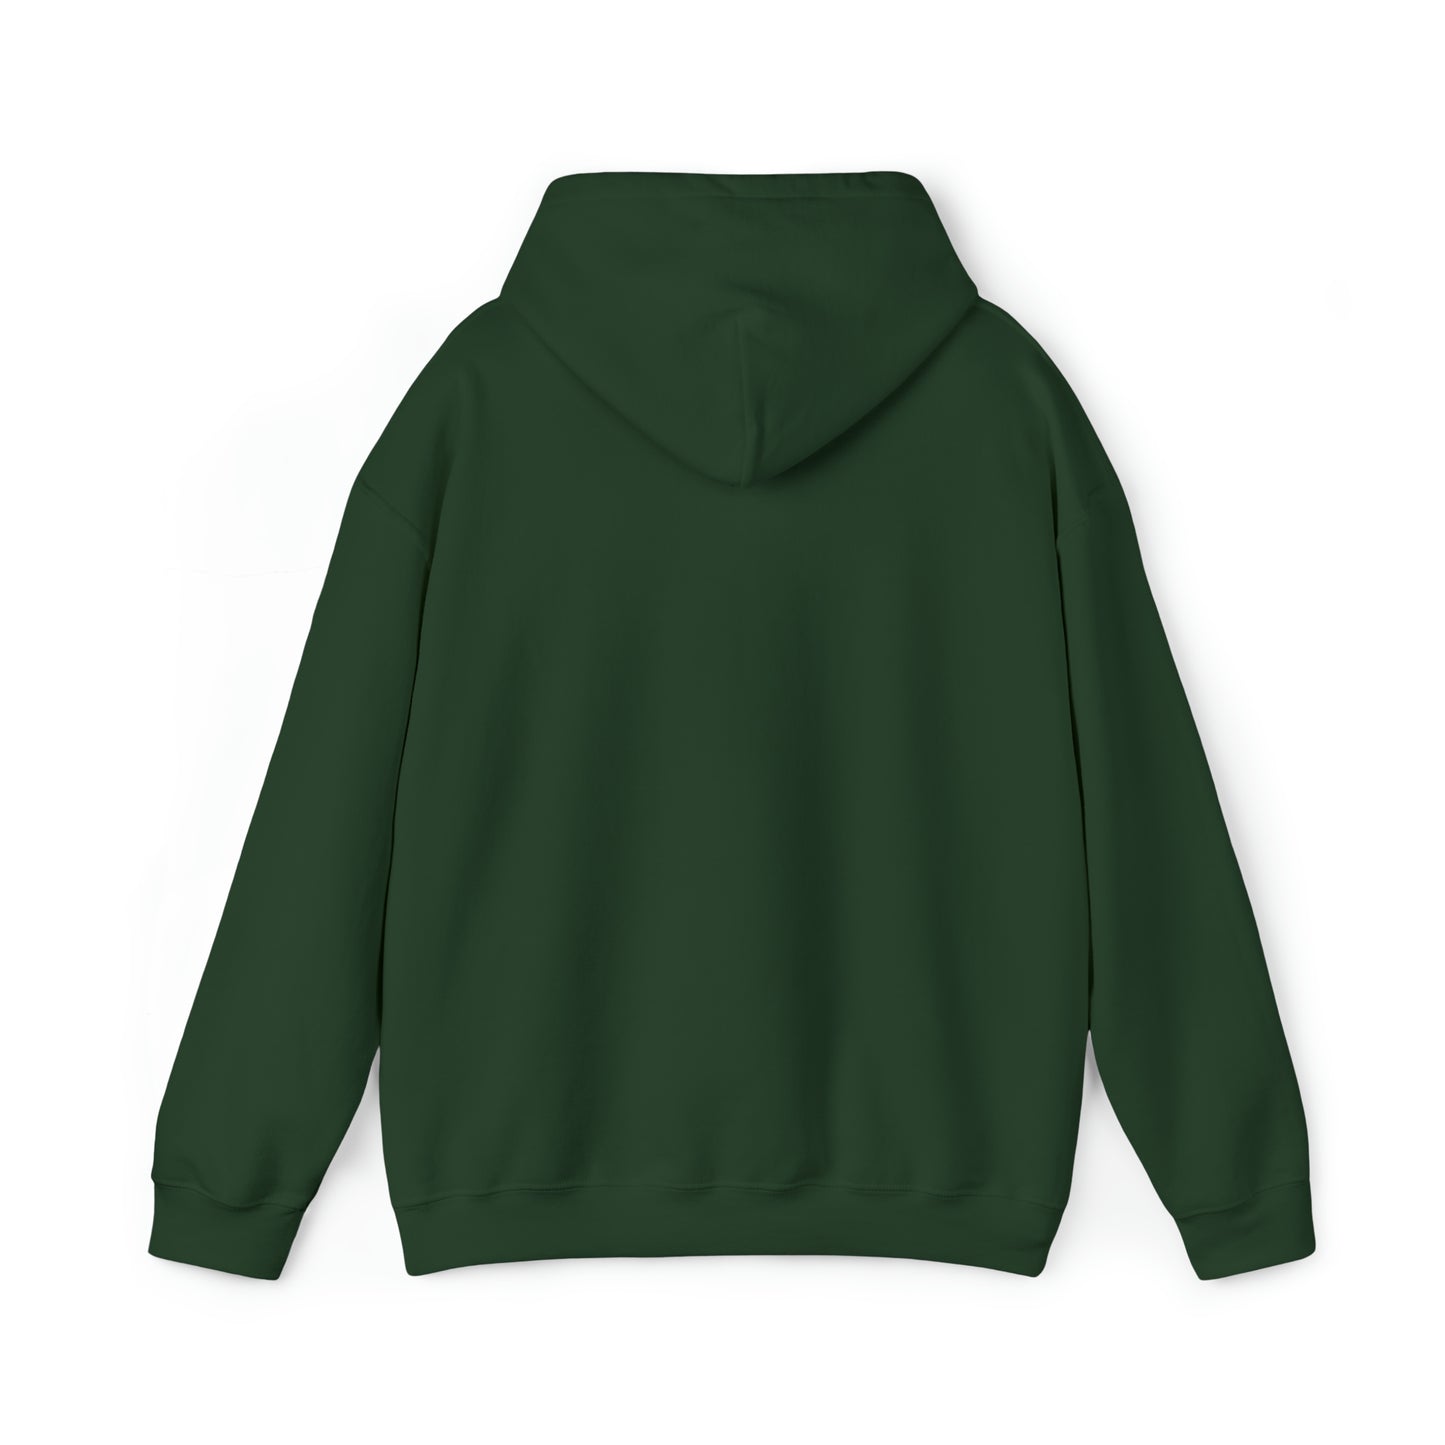 CyVison Scorpios VS Everybody Unisex Heavy Blend™ Hooded Sweatshirt